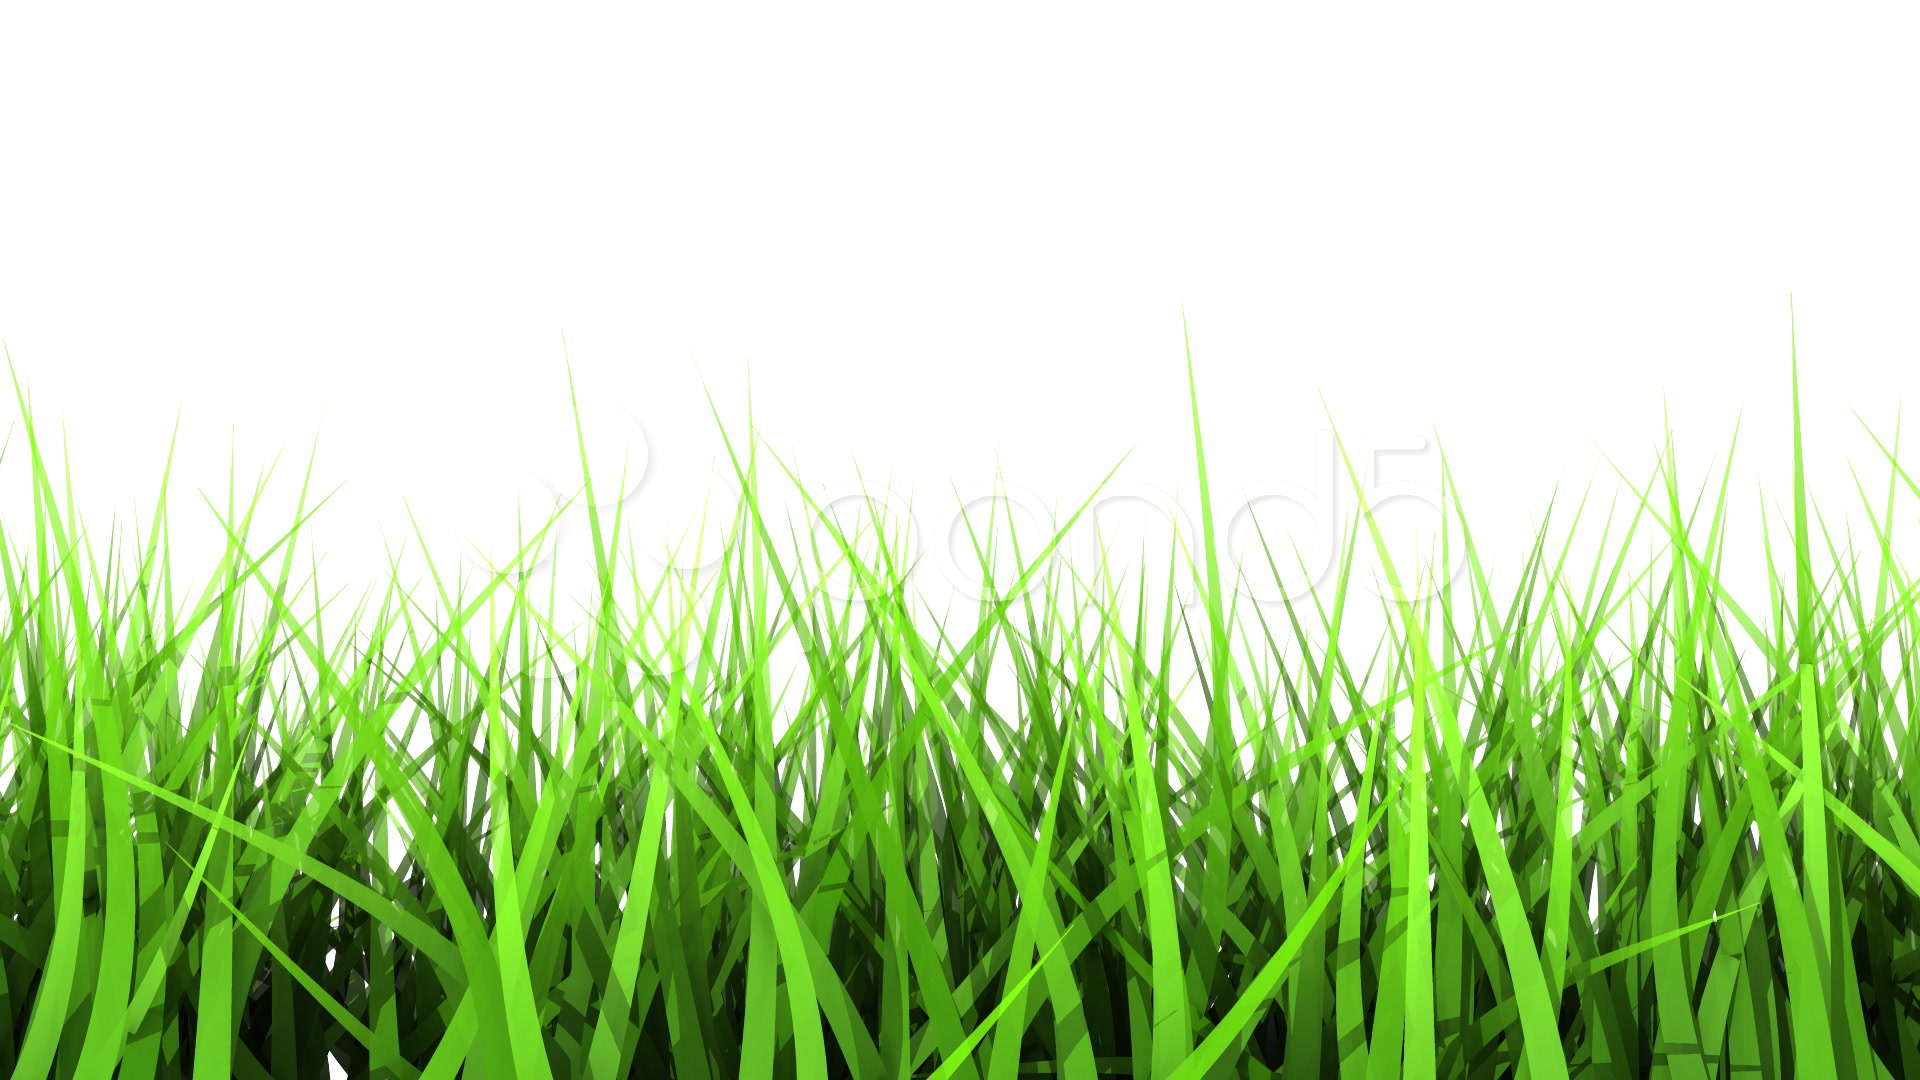 Video: Green Grass On White Background. Matte Channel. ~ #824554